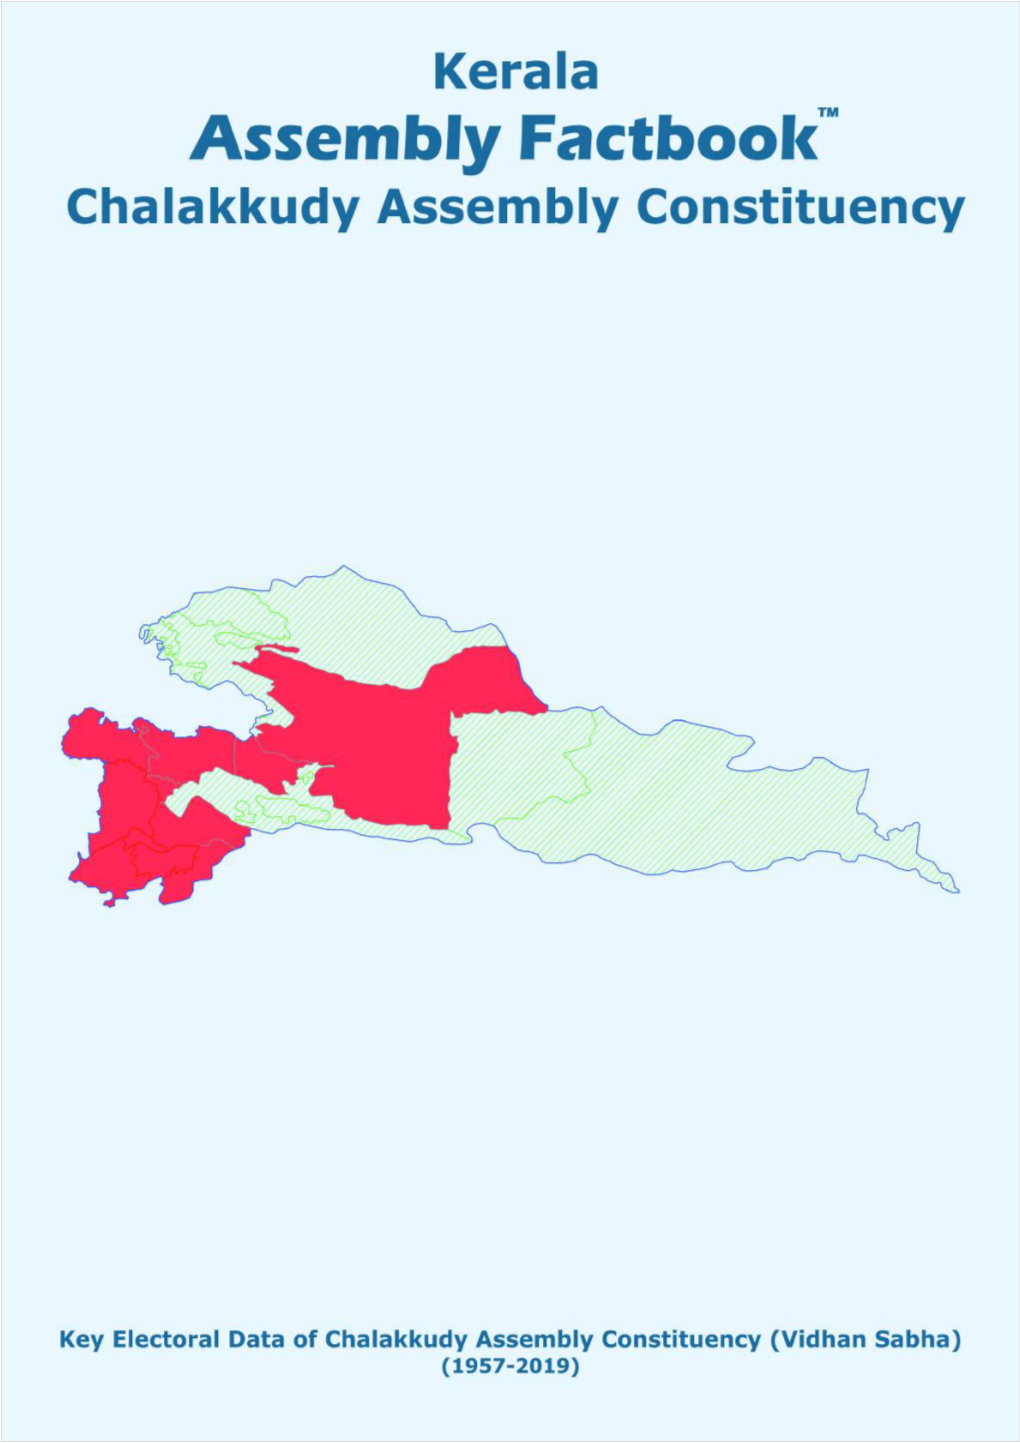 Chalakkudy Assembly Kerala Factbook